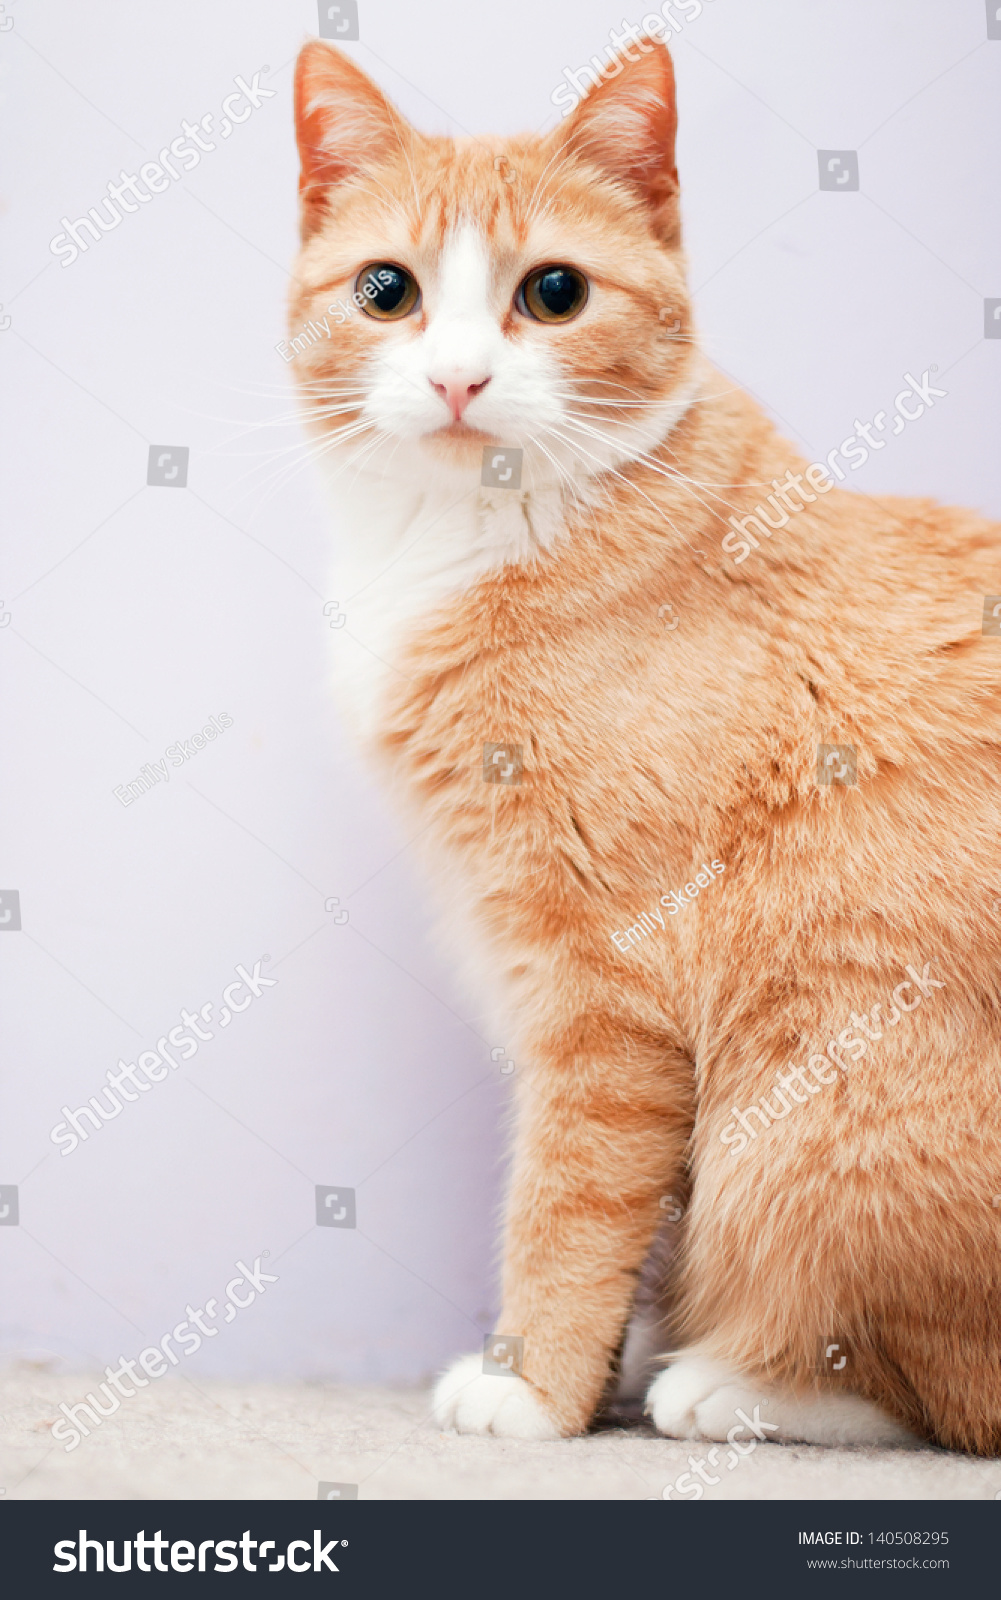 white with orange cat